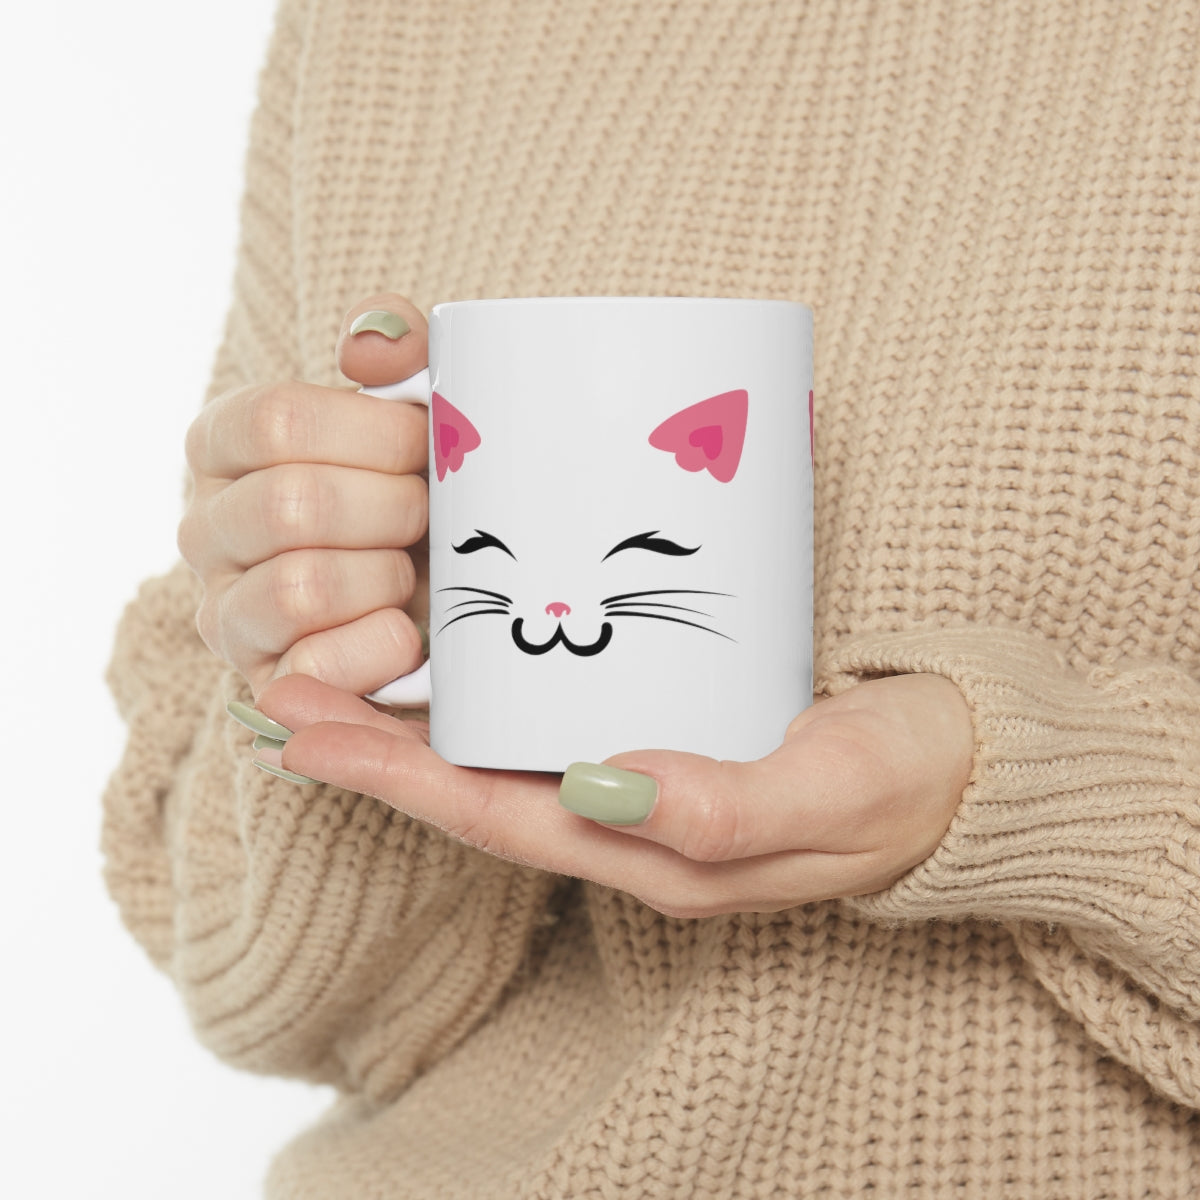 CAT COFFEE MUG, CAT FACE LINE ART, Accent Ceramic Mug